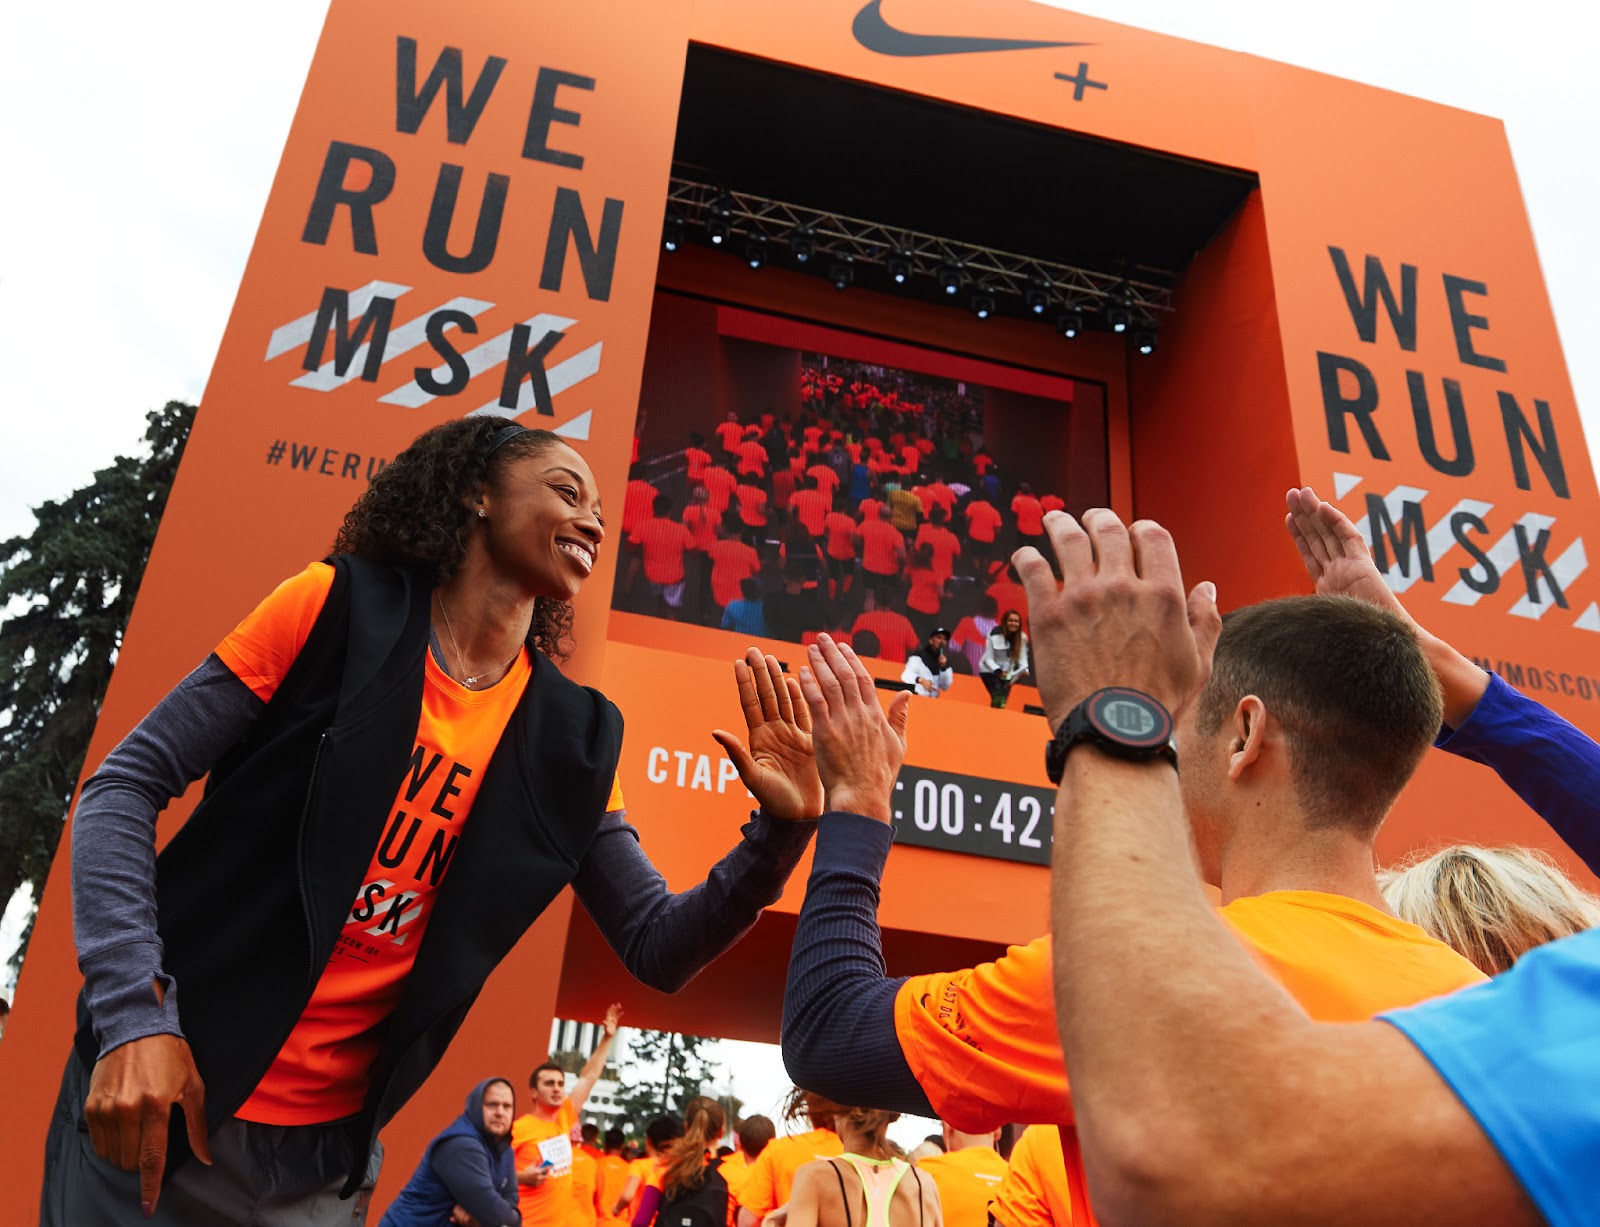 First ad. We Run Moscow. We Run Moscow футболка. We Run msk 2014. Nike we Run Moscow.